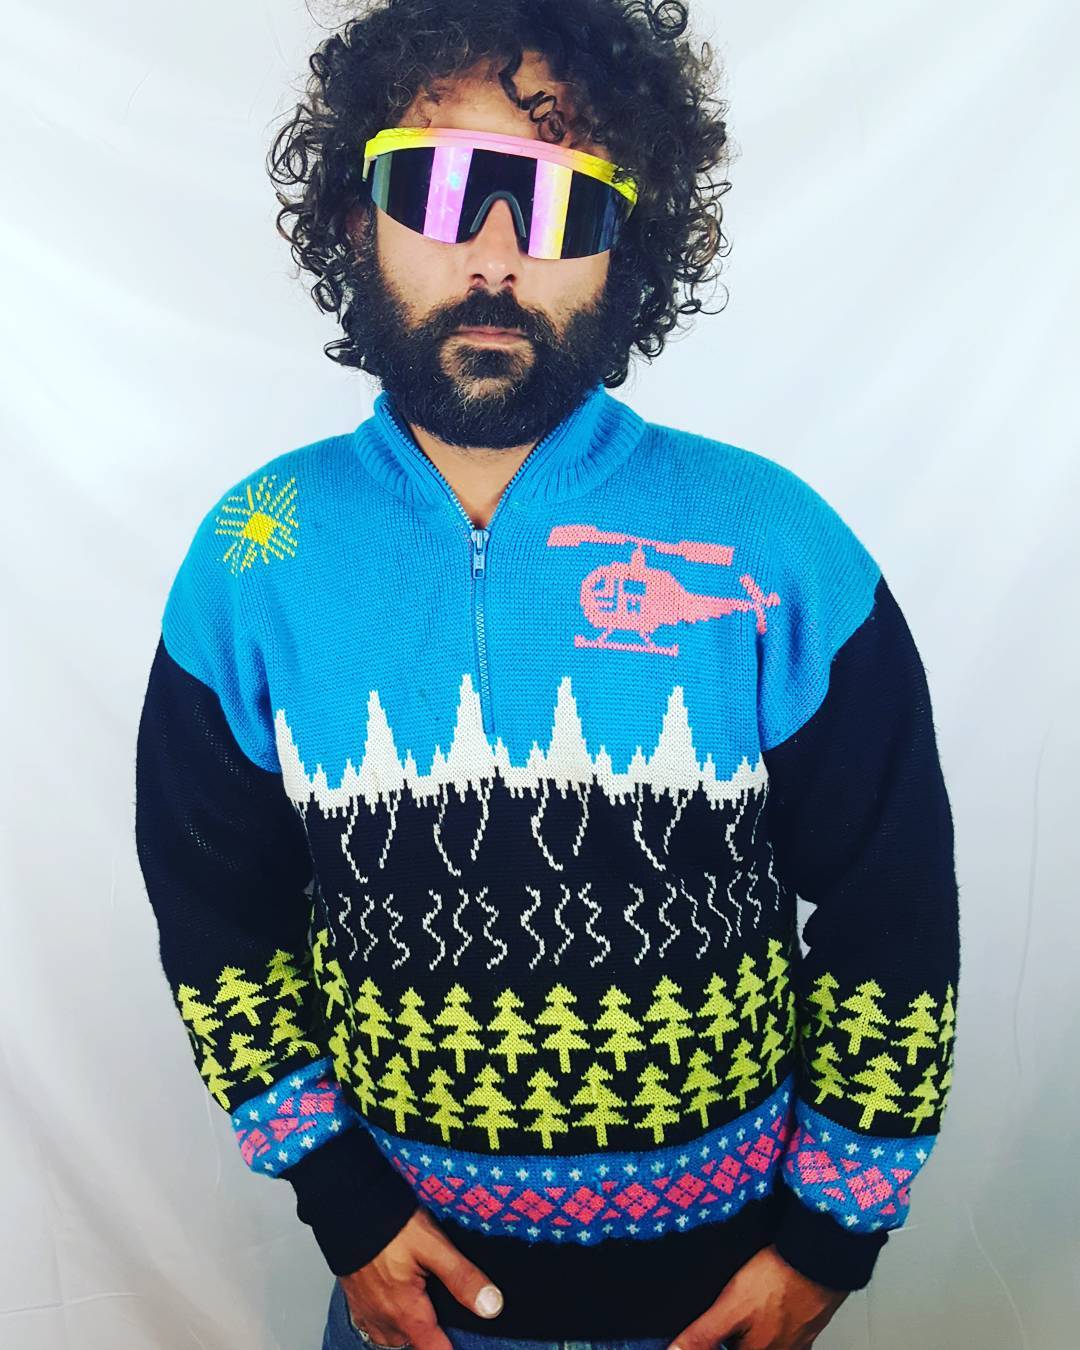 Man Wearing Creative Vintage Sweater. Photo by Instagram user @rogueretrovintage